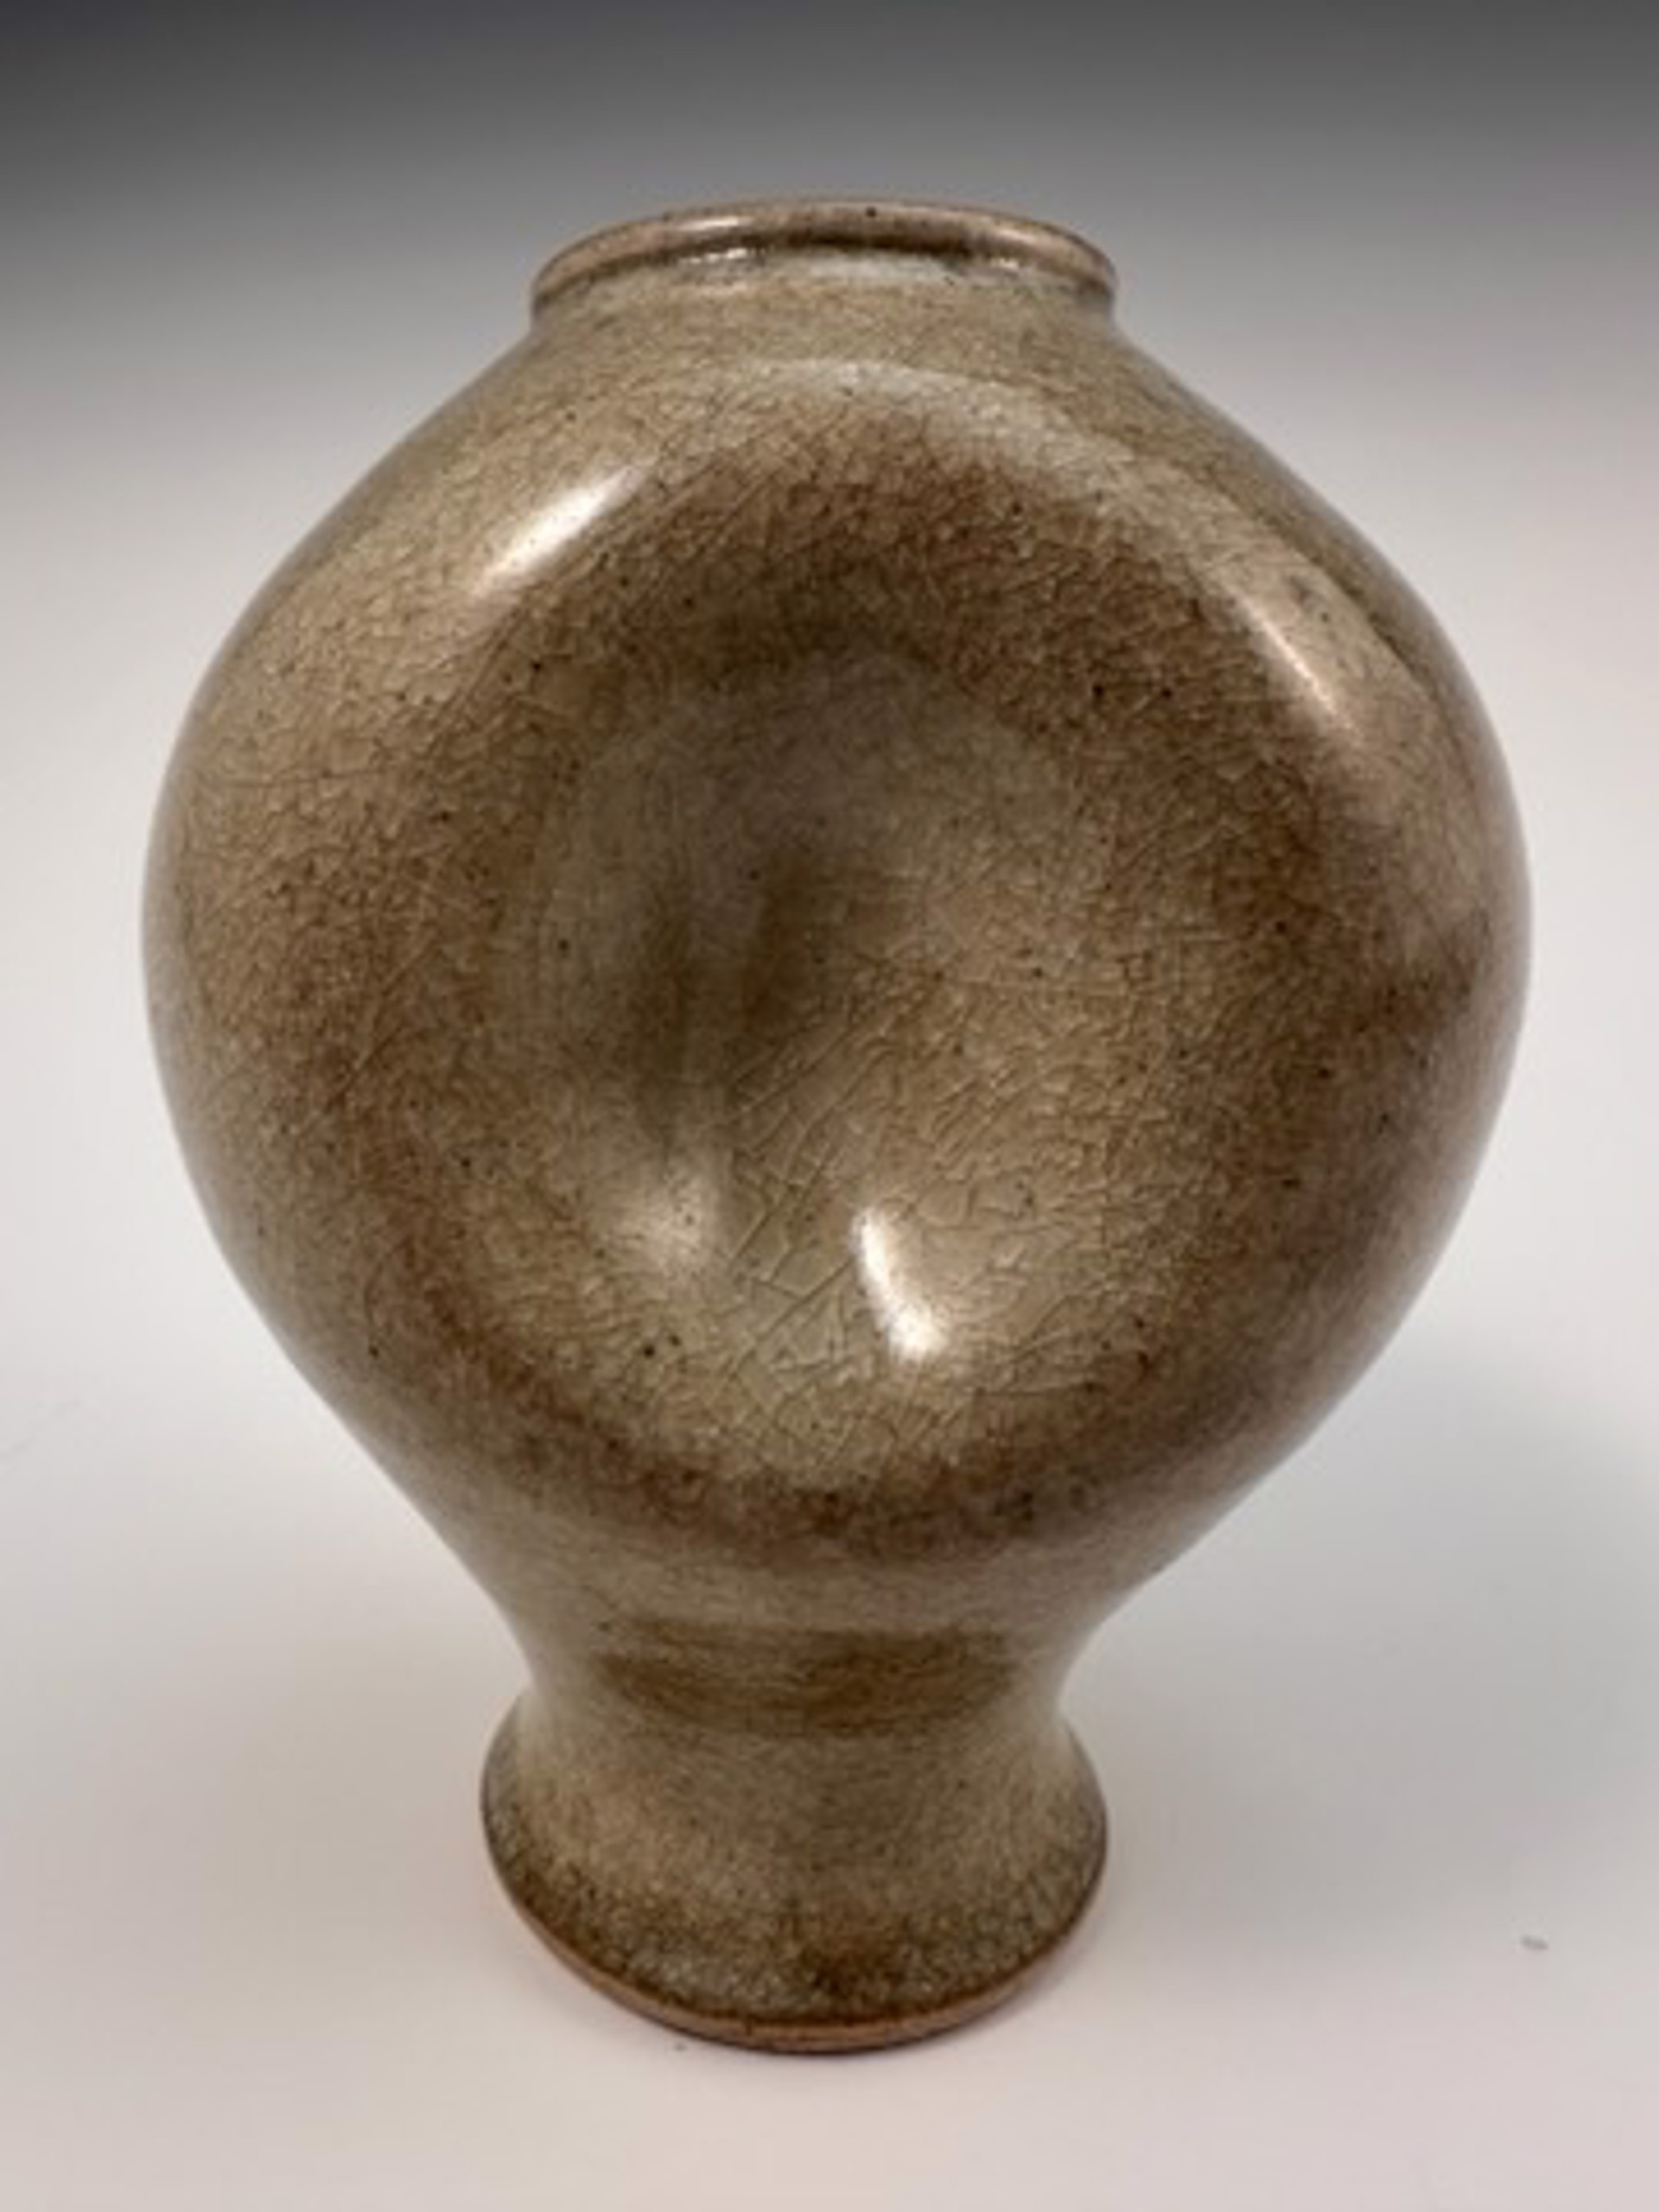 Vase 31 by David LaLomia